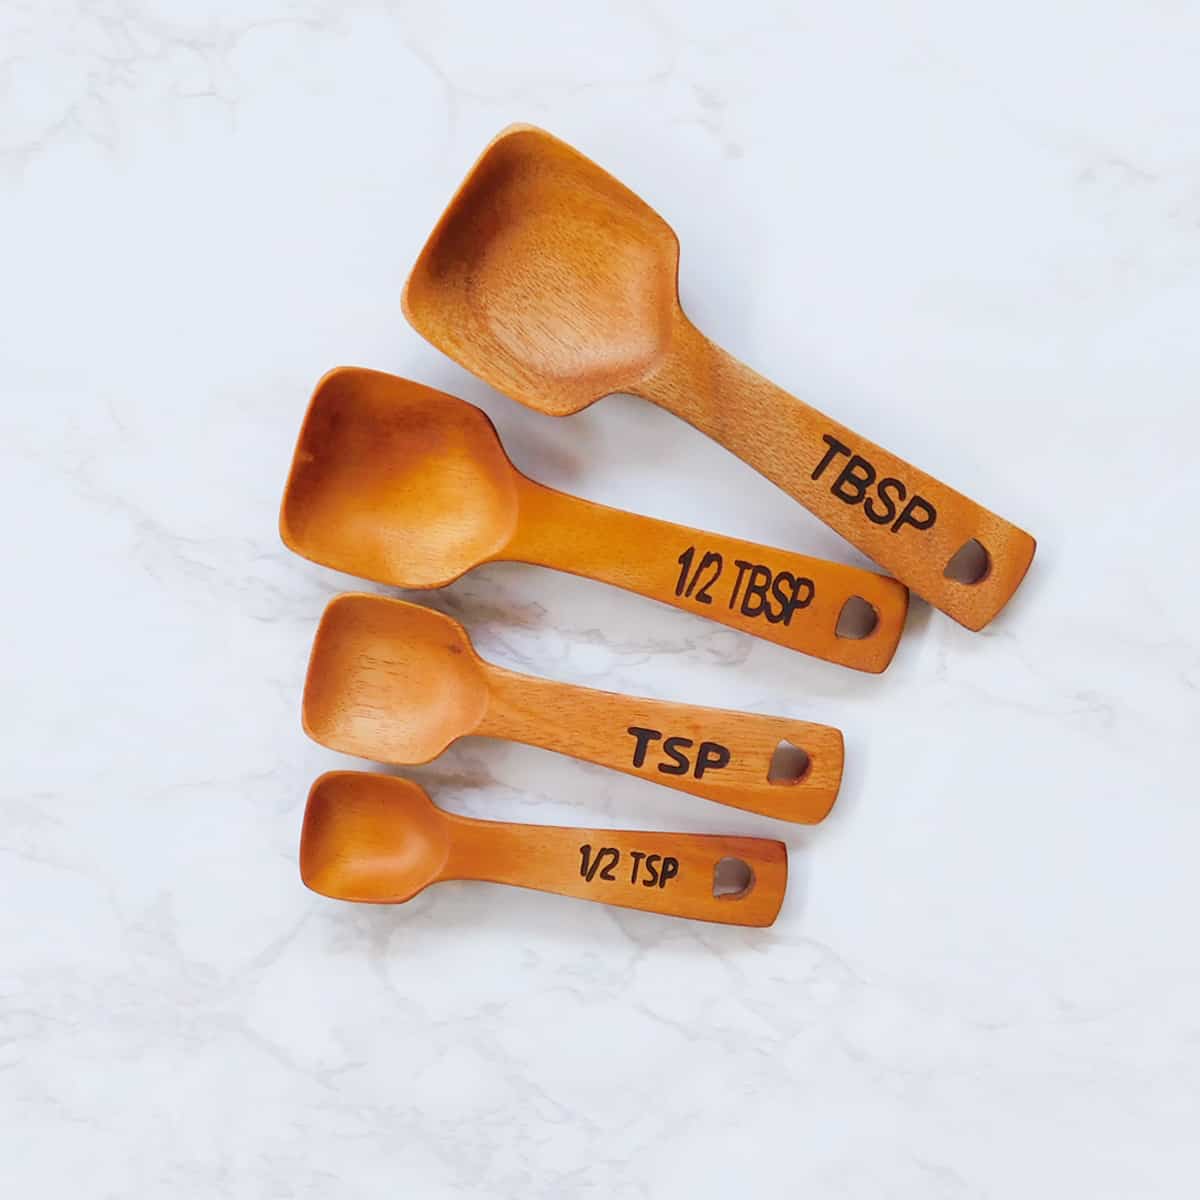 Measuring Spoons, Wooden Measuring Spoons